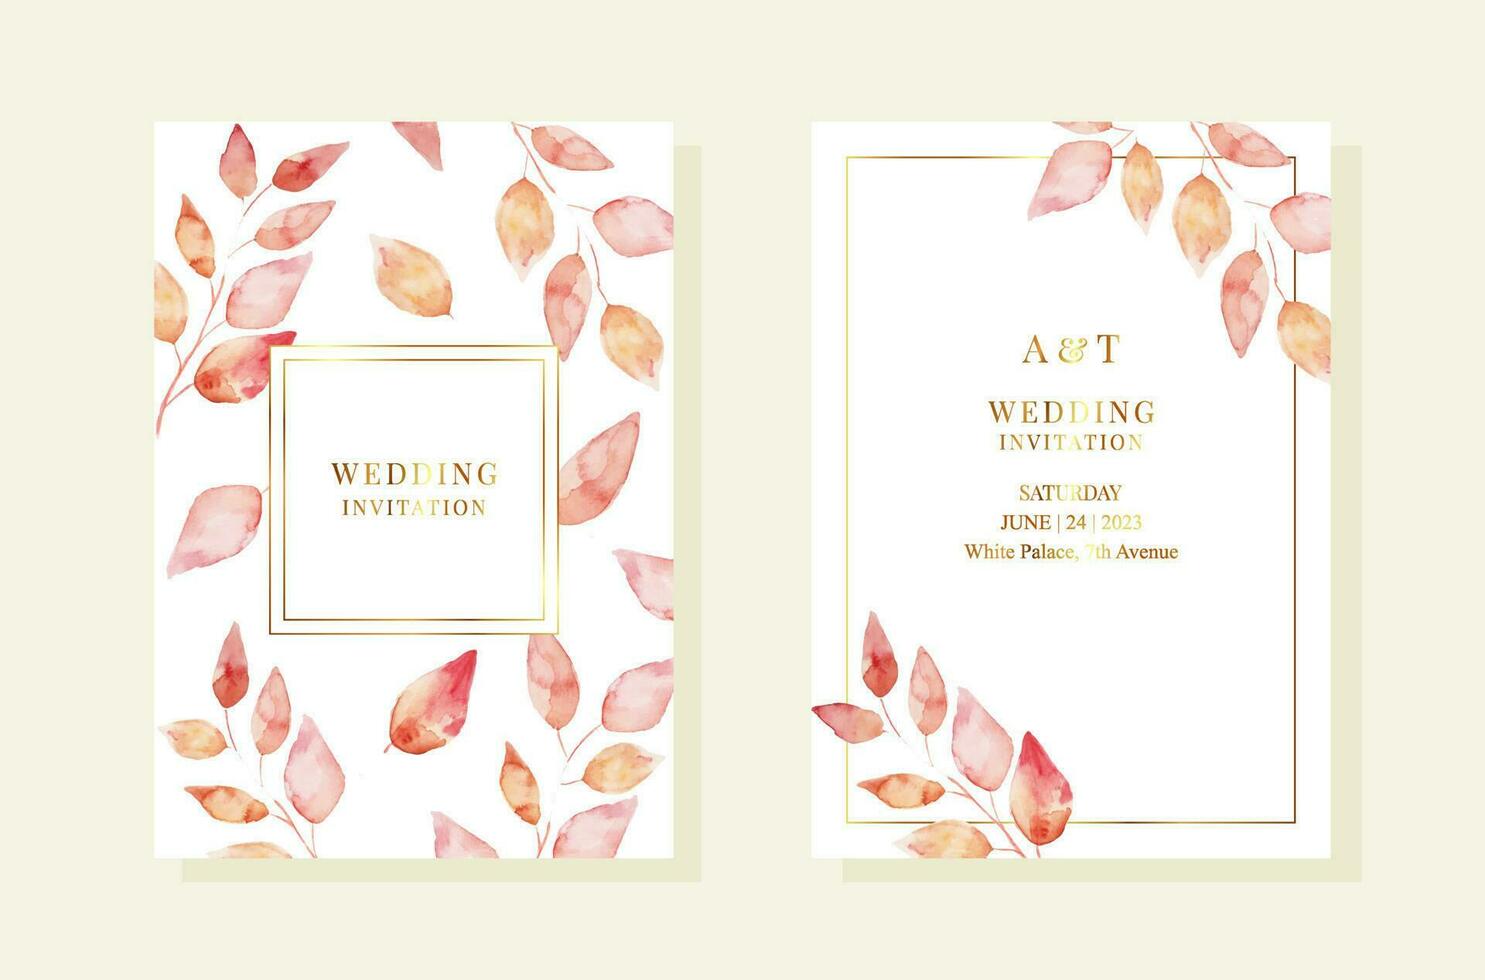 Hochzeit pemplates mit rot Aquarell Blätter. Gold Frames vektor